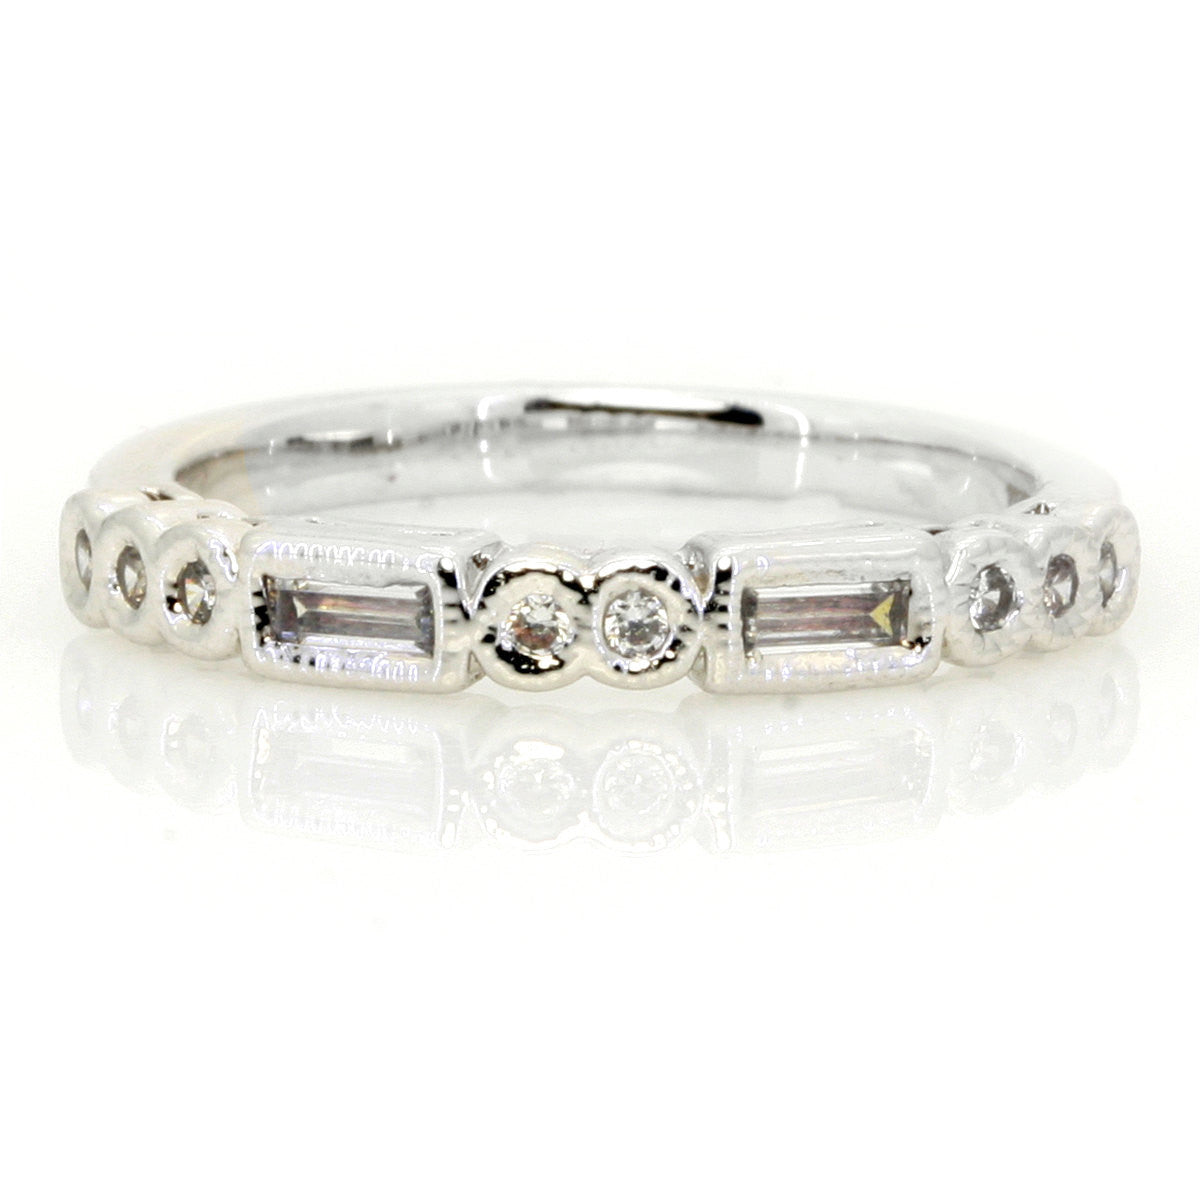 Semi Mount Engagement Ring Wedding Set, Unique Art Deco Style For 1 Carat Center Stone, Has 1 Carat Diamonds - 73080